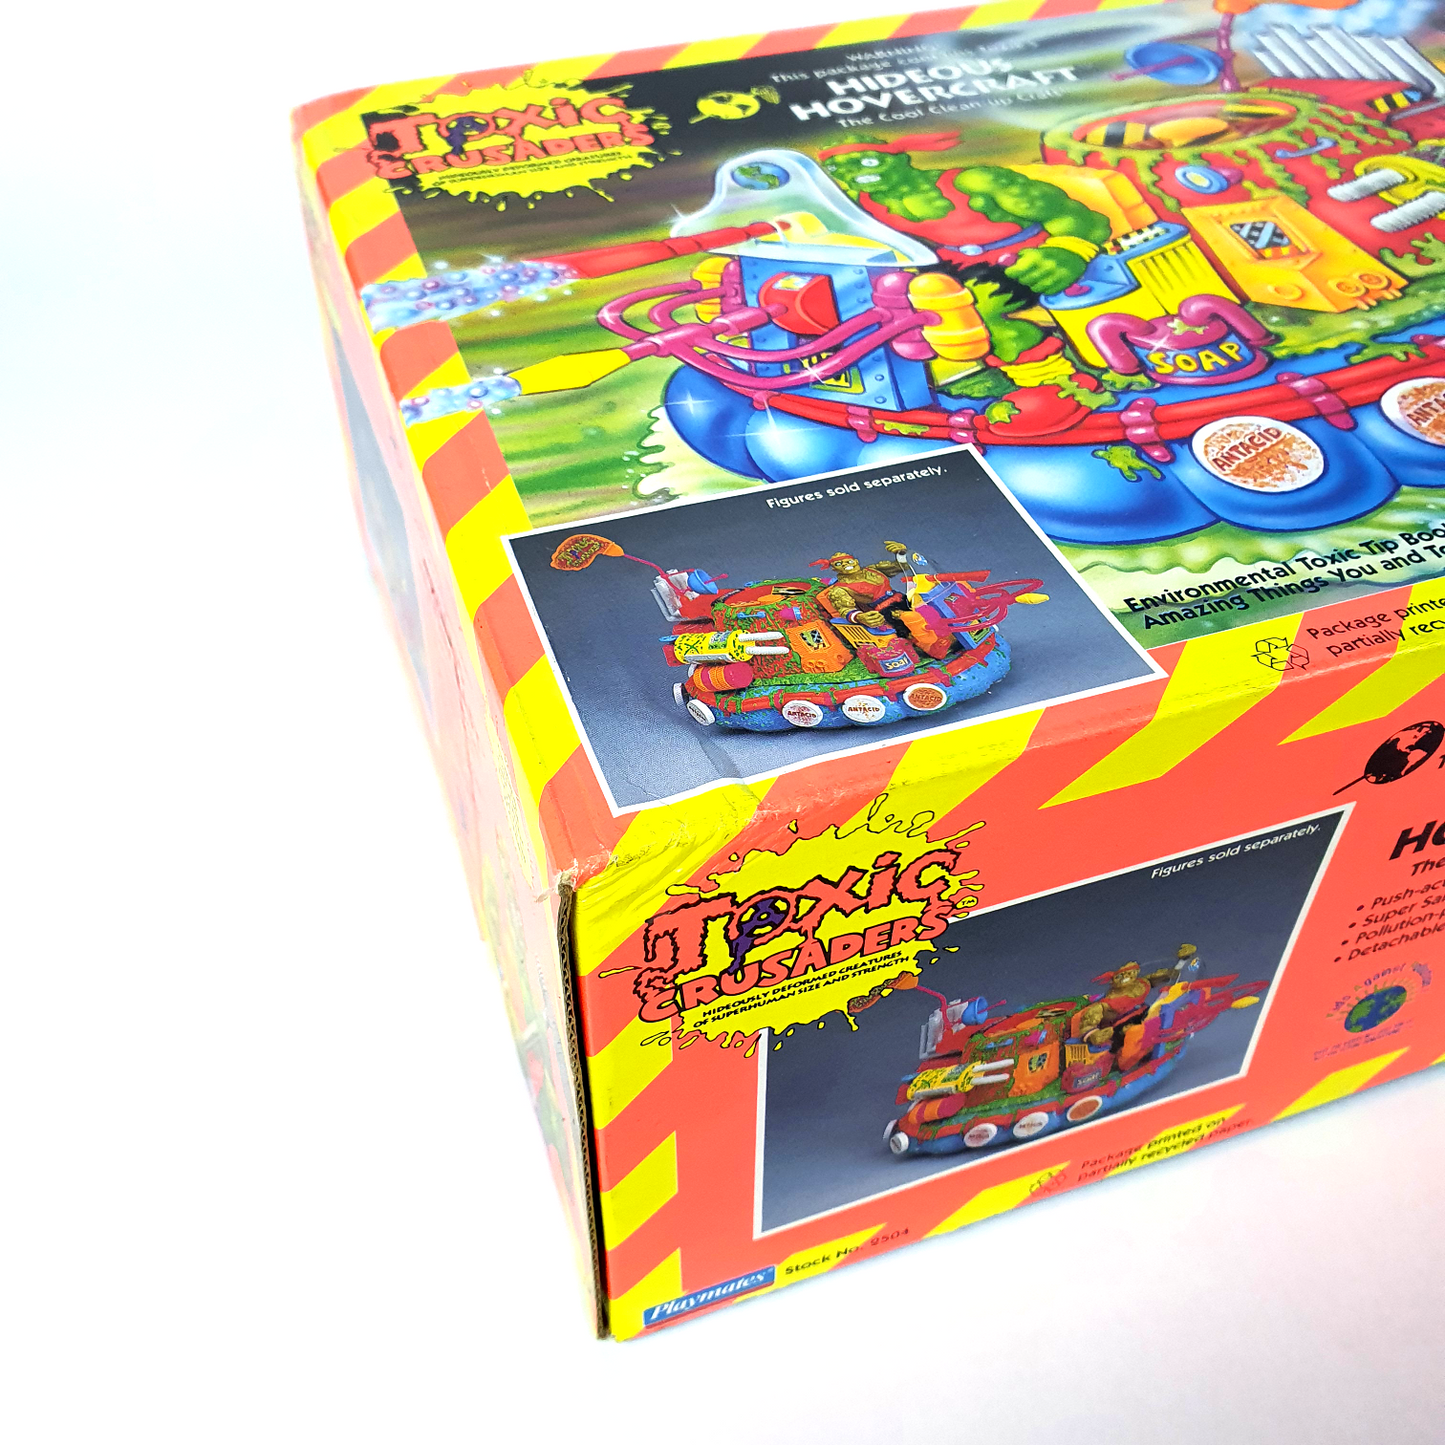 TOXIC CRUSADERS ☆ HIDEOUS HOVERCRAFT Action Figure Vehicle ☆ MISB BOXED SEALED Vintage Original 90s Playmates